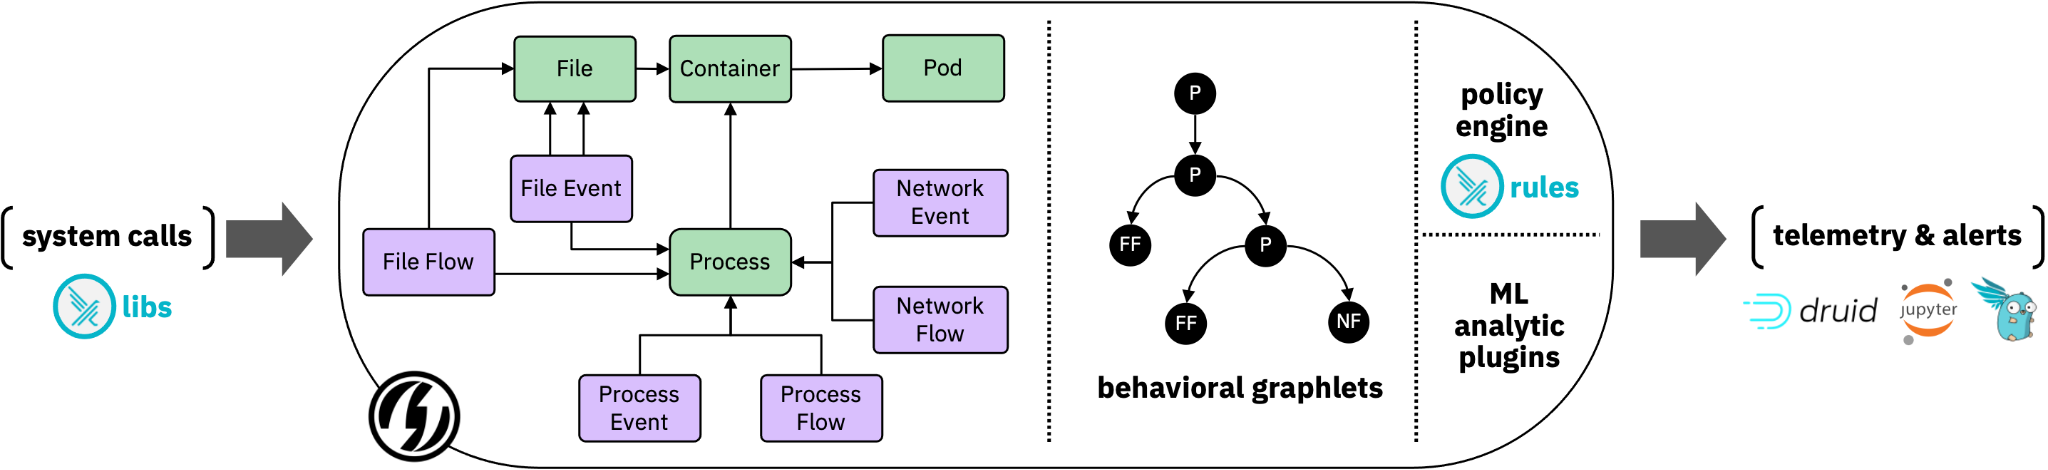 SysFlow diagram